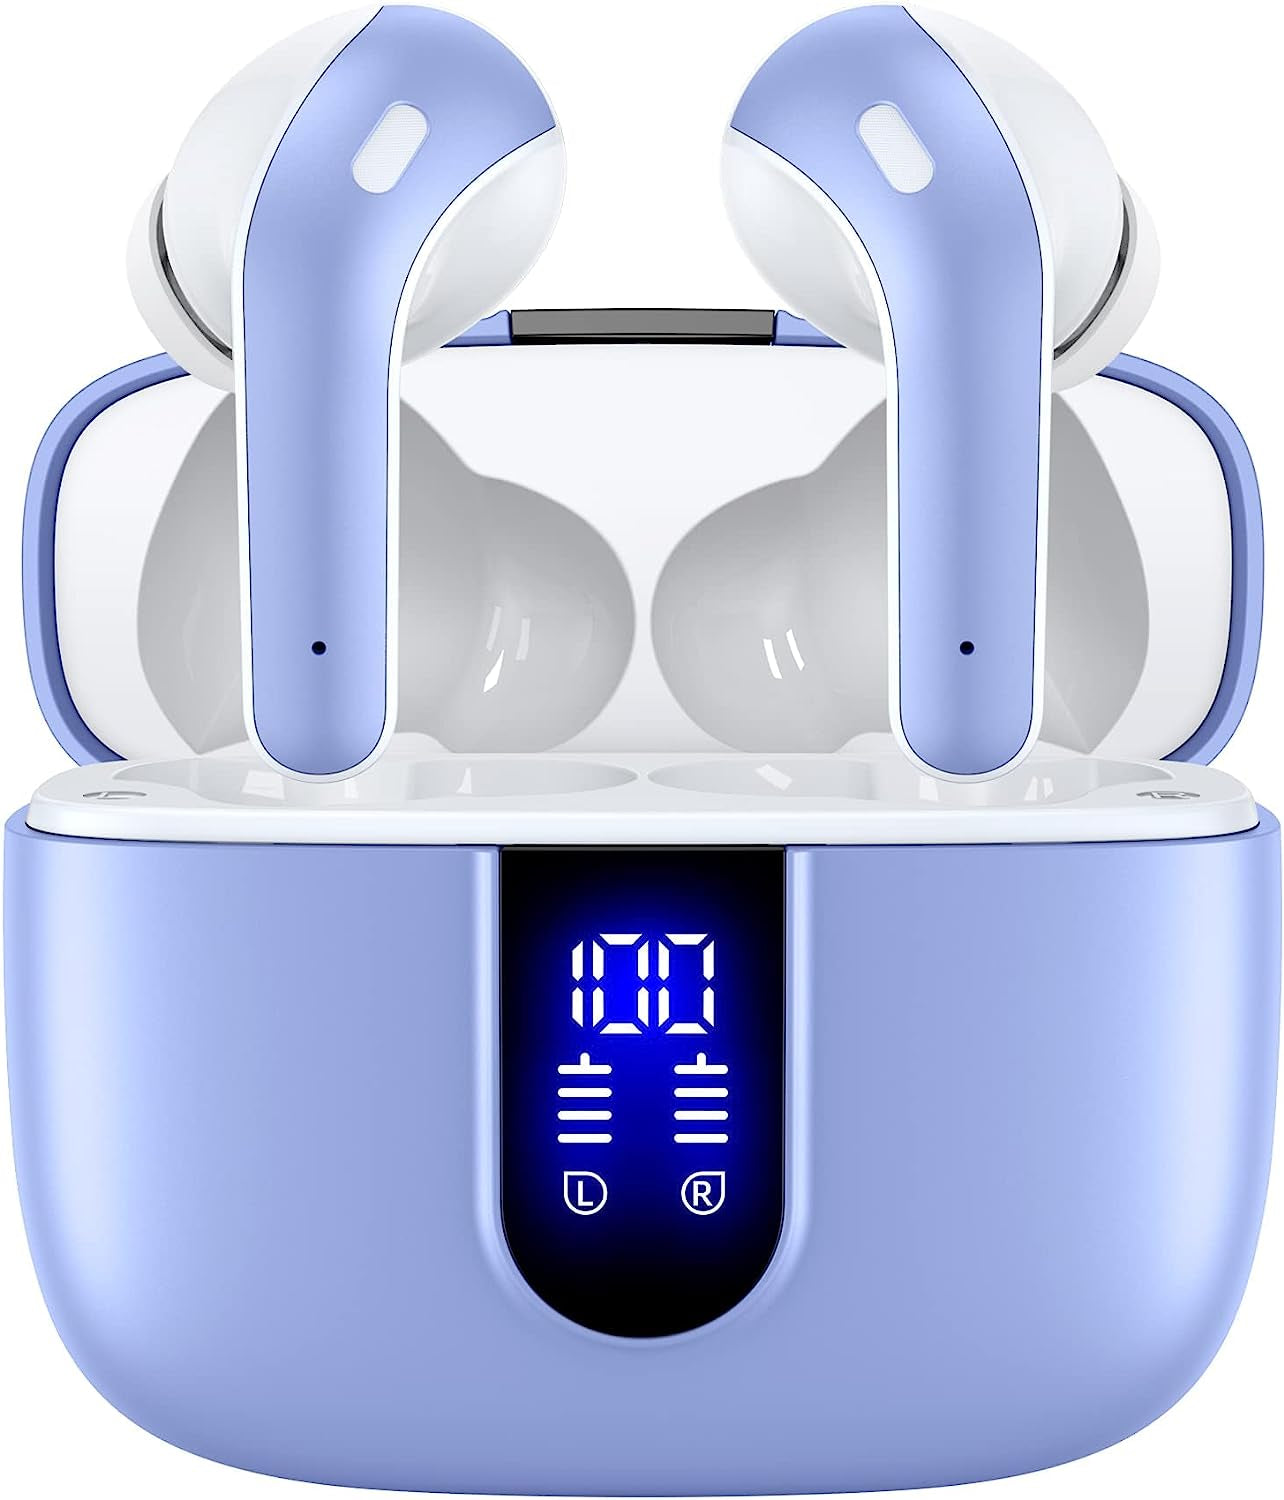 Wireless Earbuds - Everyday-Sales.com